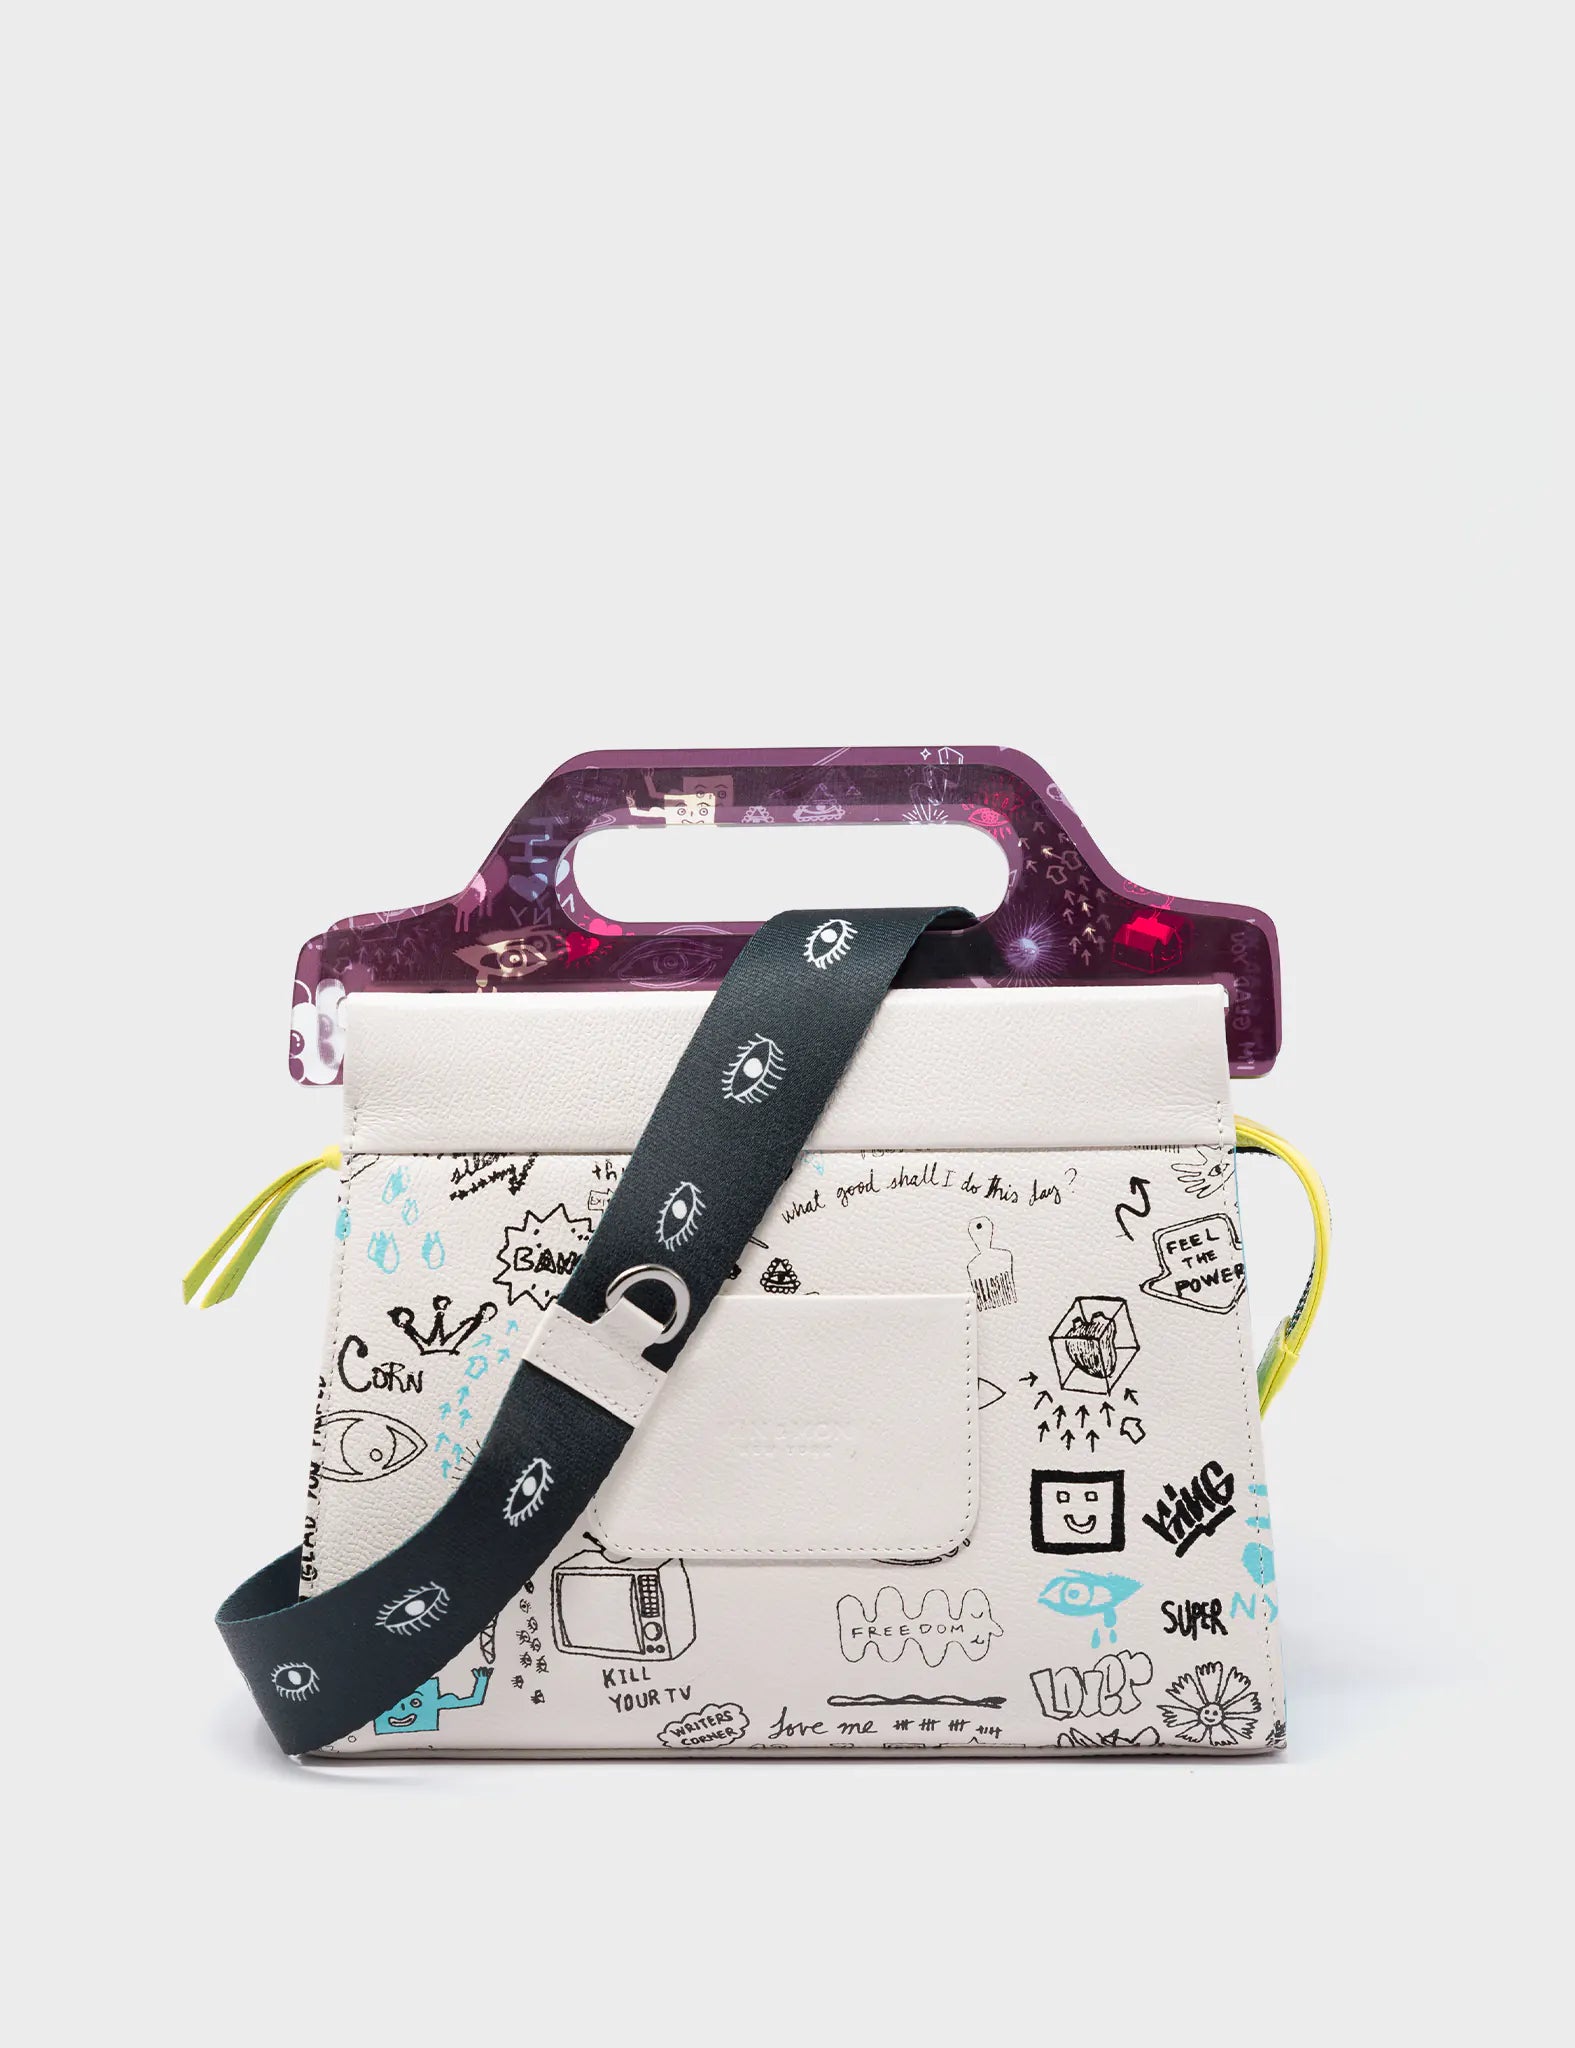 Vali Cream Leather Crossbody Handbag Plastic Handle - Urban Doodles Print - Back View